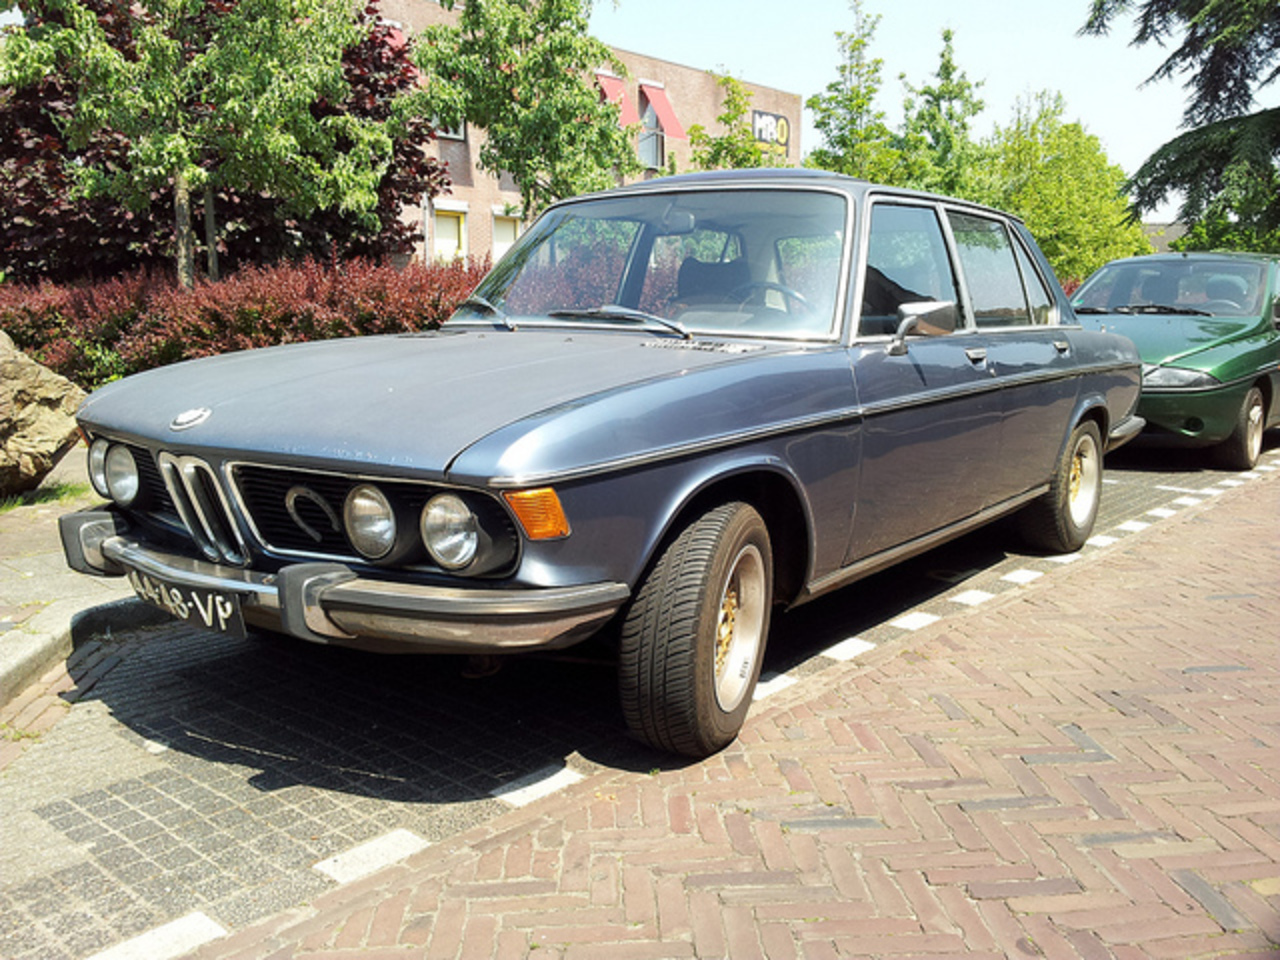 1973 BMW 2800 | Flickr - Photo Sharing!